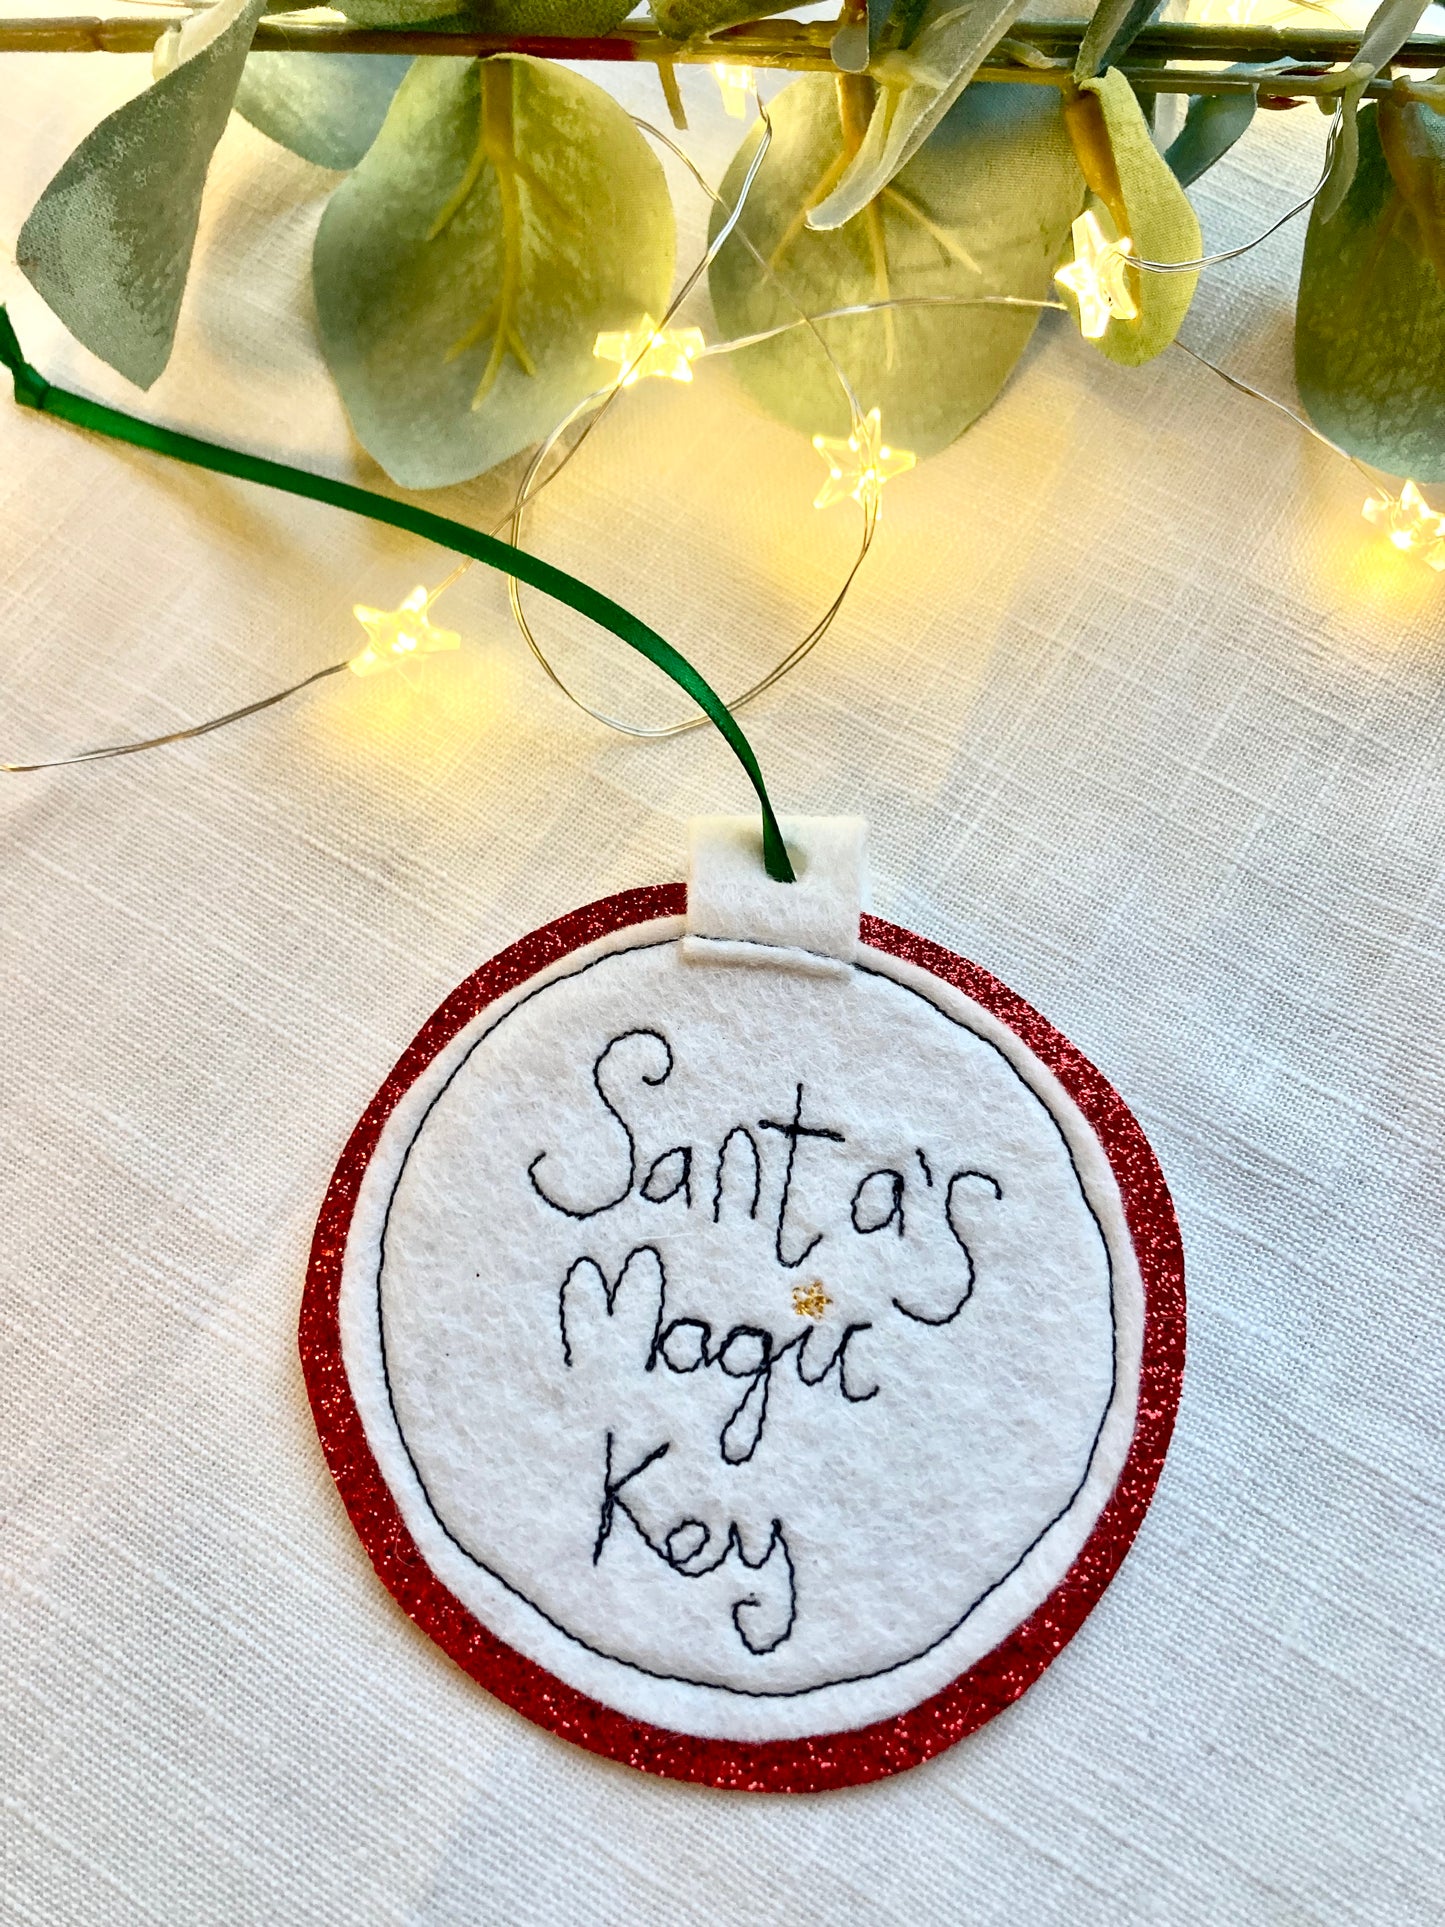 Santa's magic key 